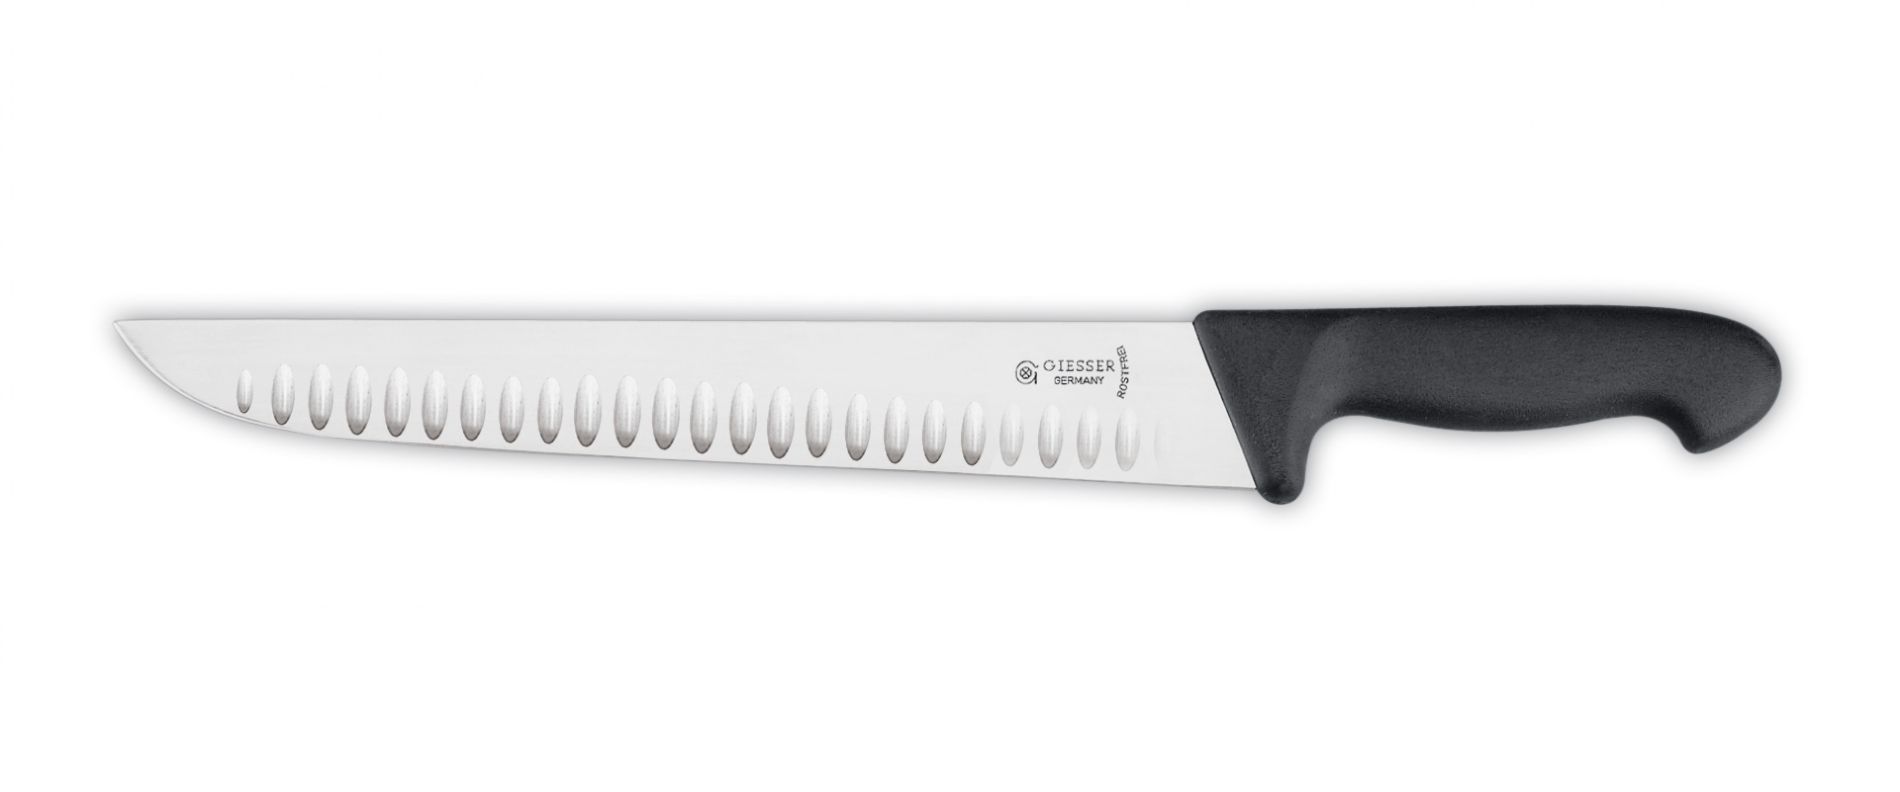 Cuchillo carnicero GIESSER para filetear, hoja 27cm, estrecha, rígida, con alveólos, mango clásico,  negro